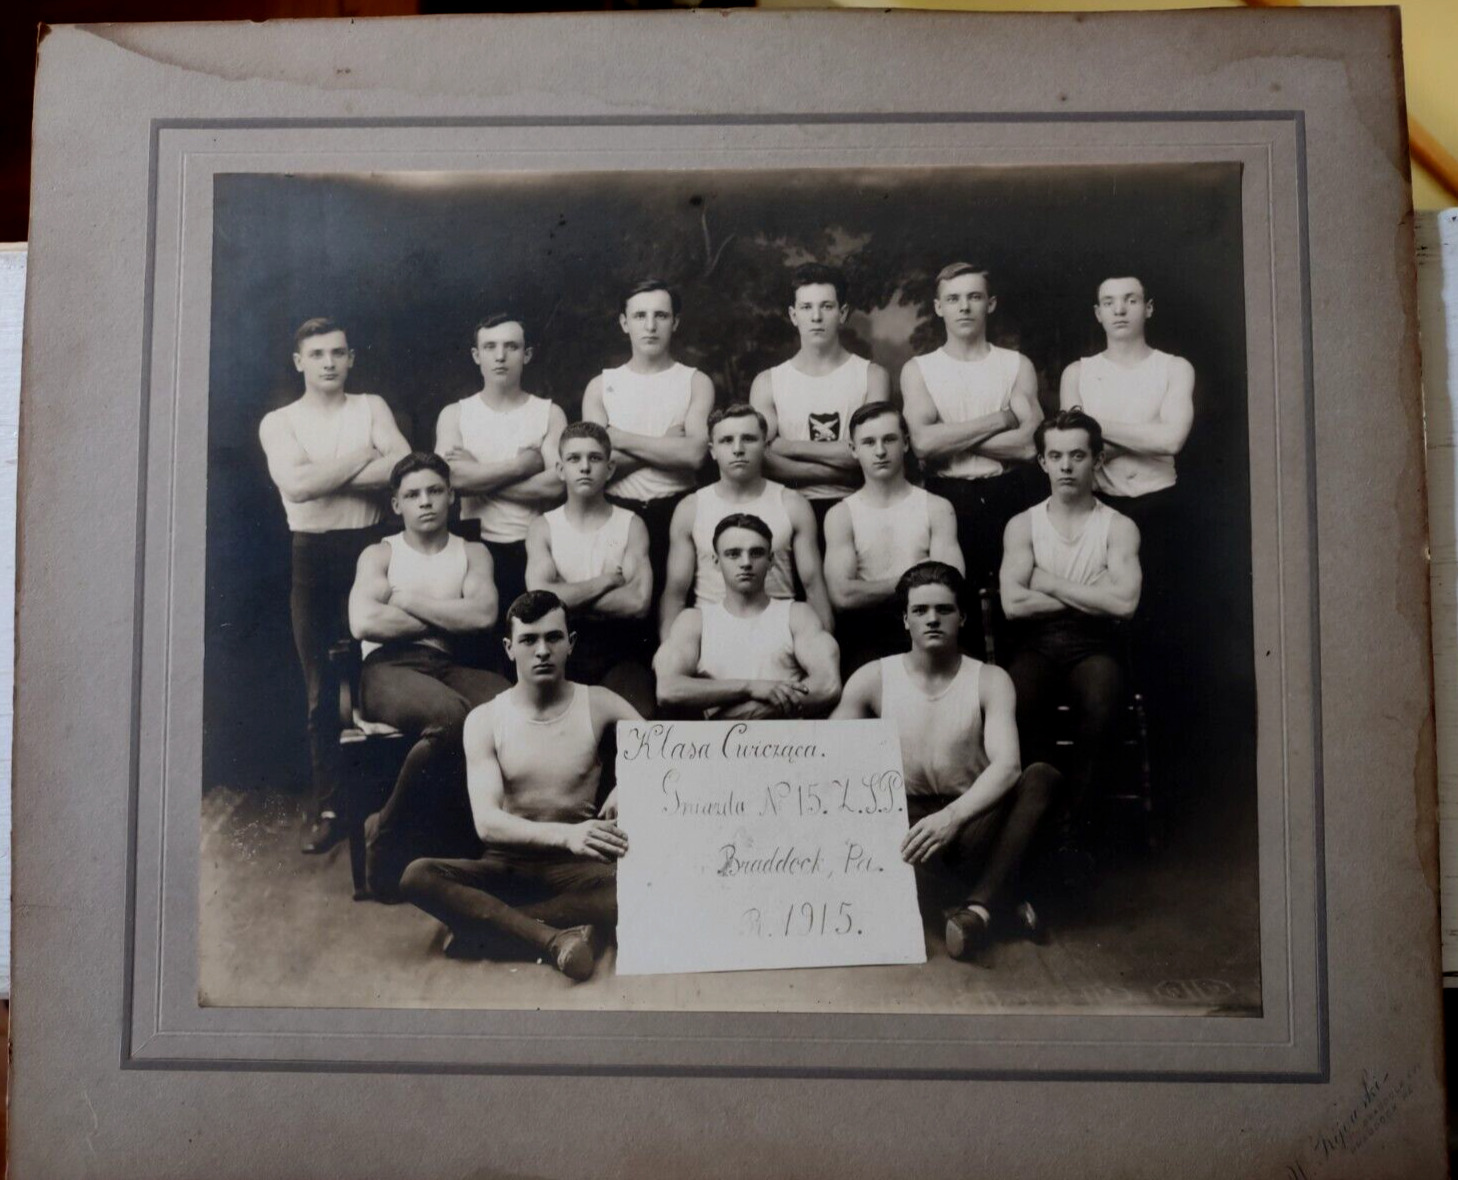 Braddock PA 1915 Polish Gymnasts / Exercise Club 13 x 11 Original Photo